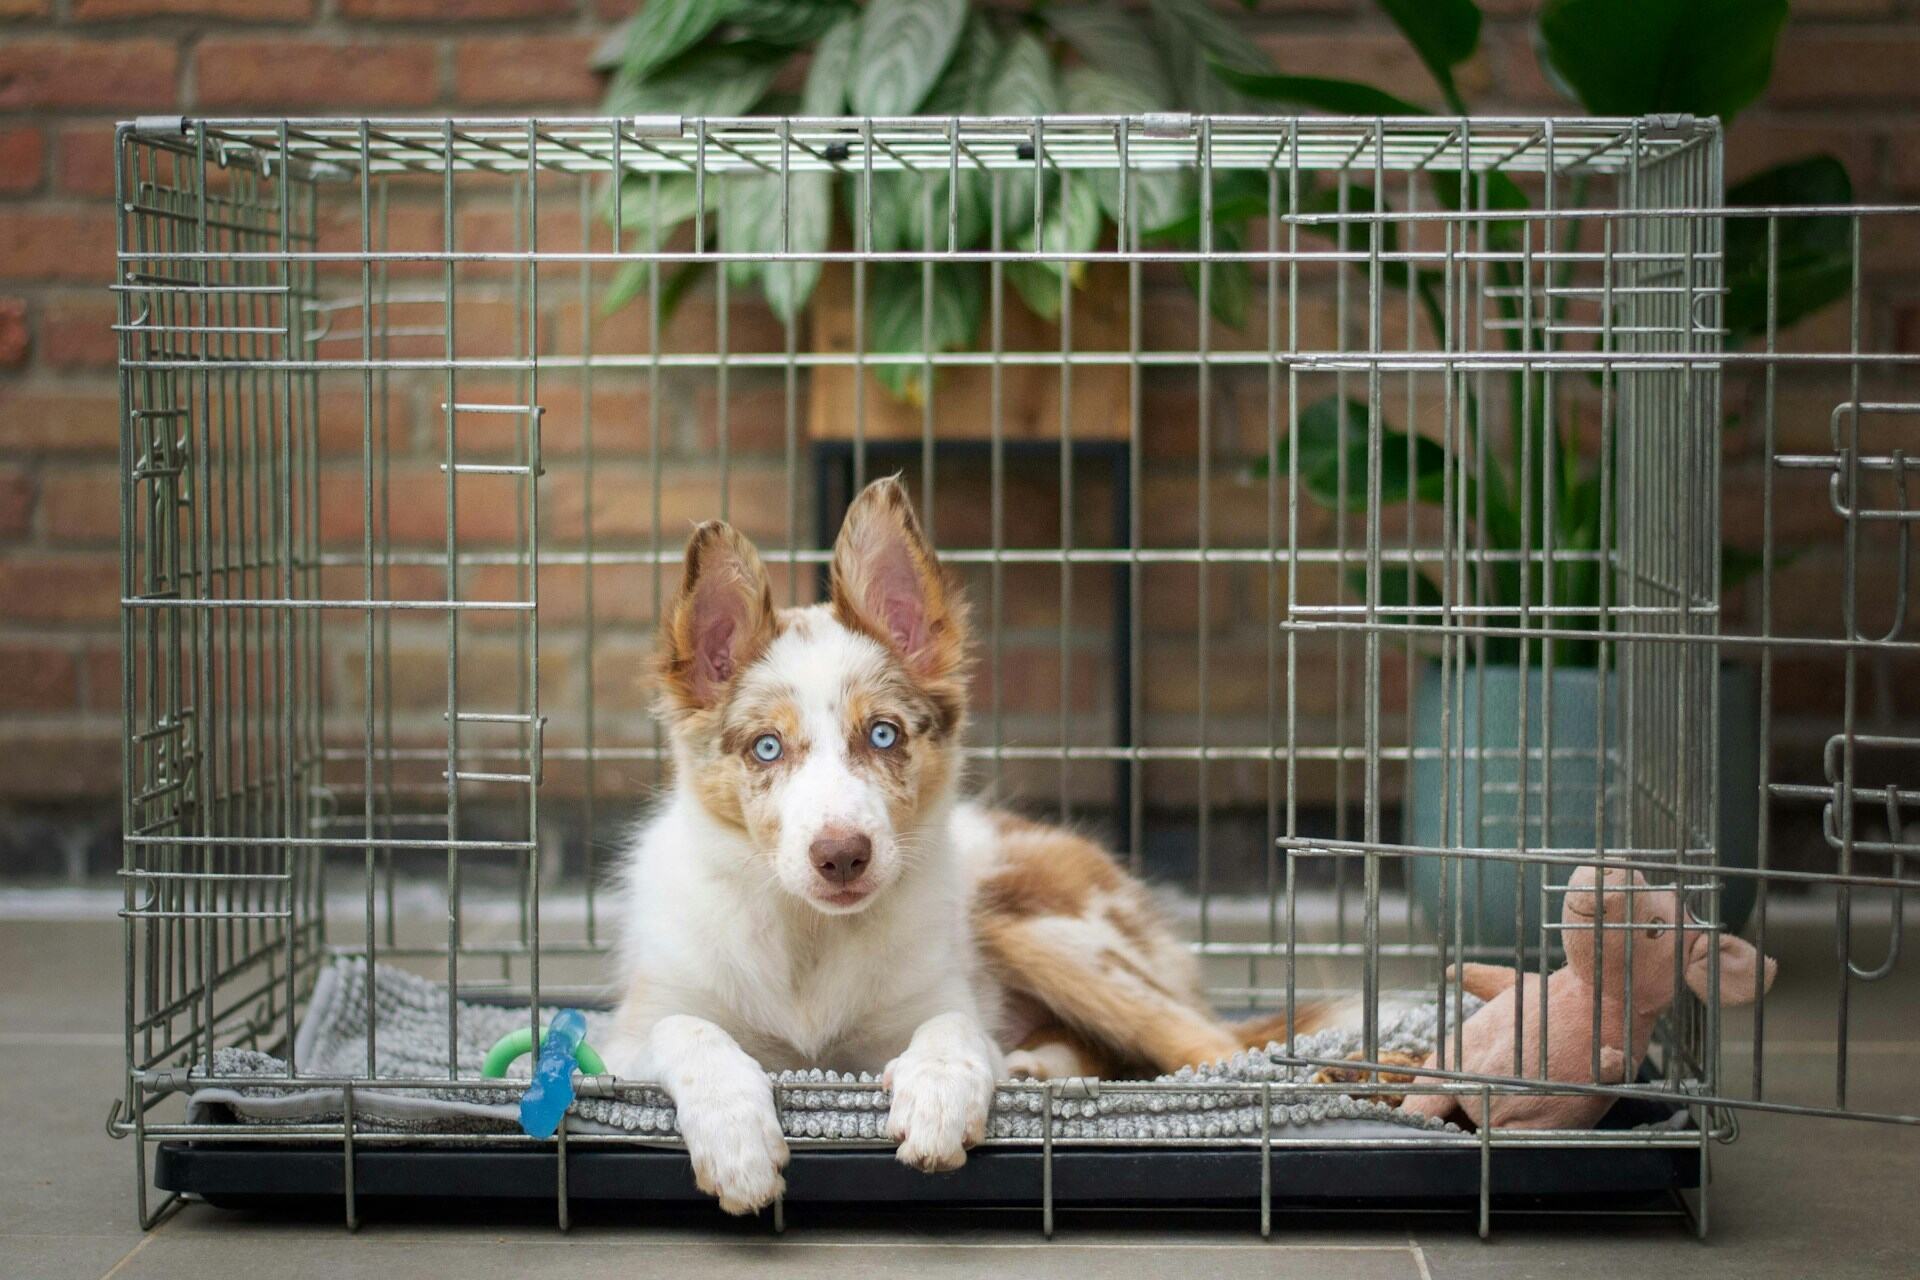 An Australian Shepherd puppy sitting inside a metal crate